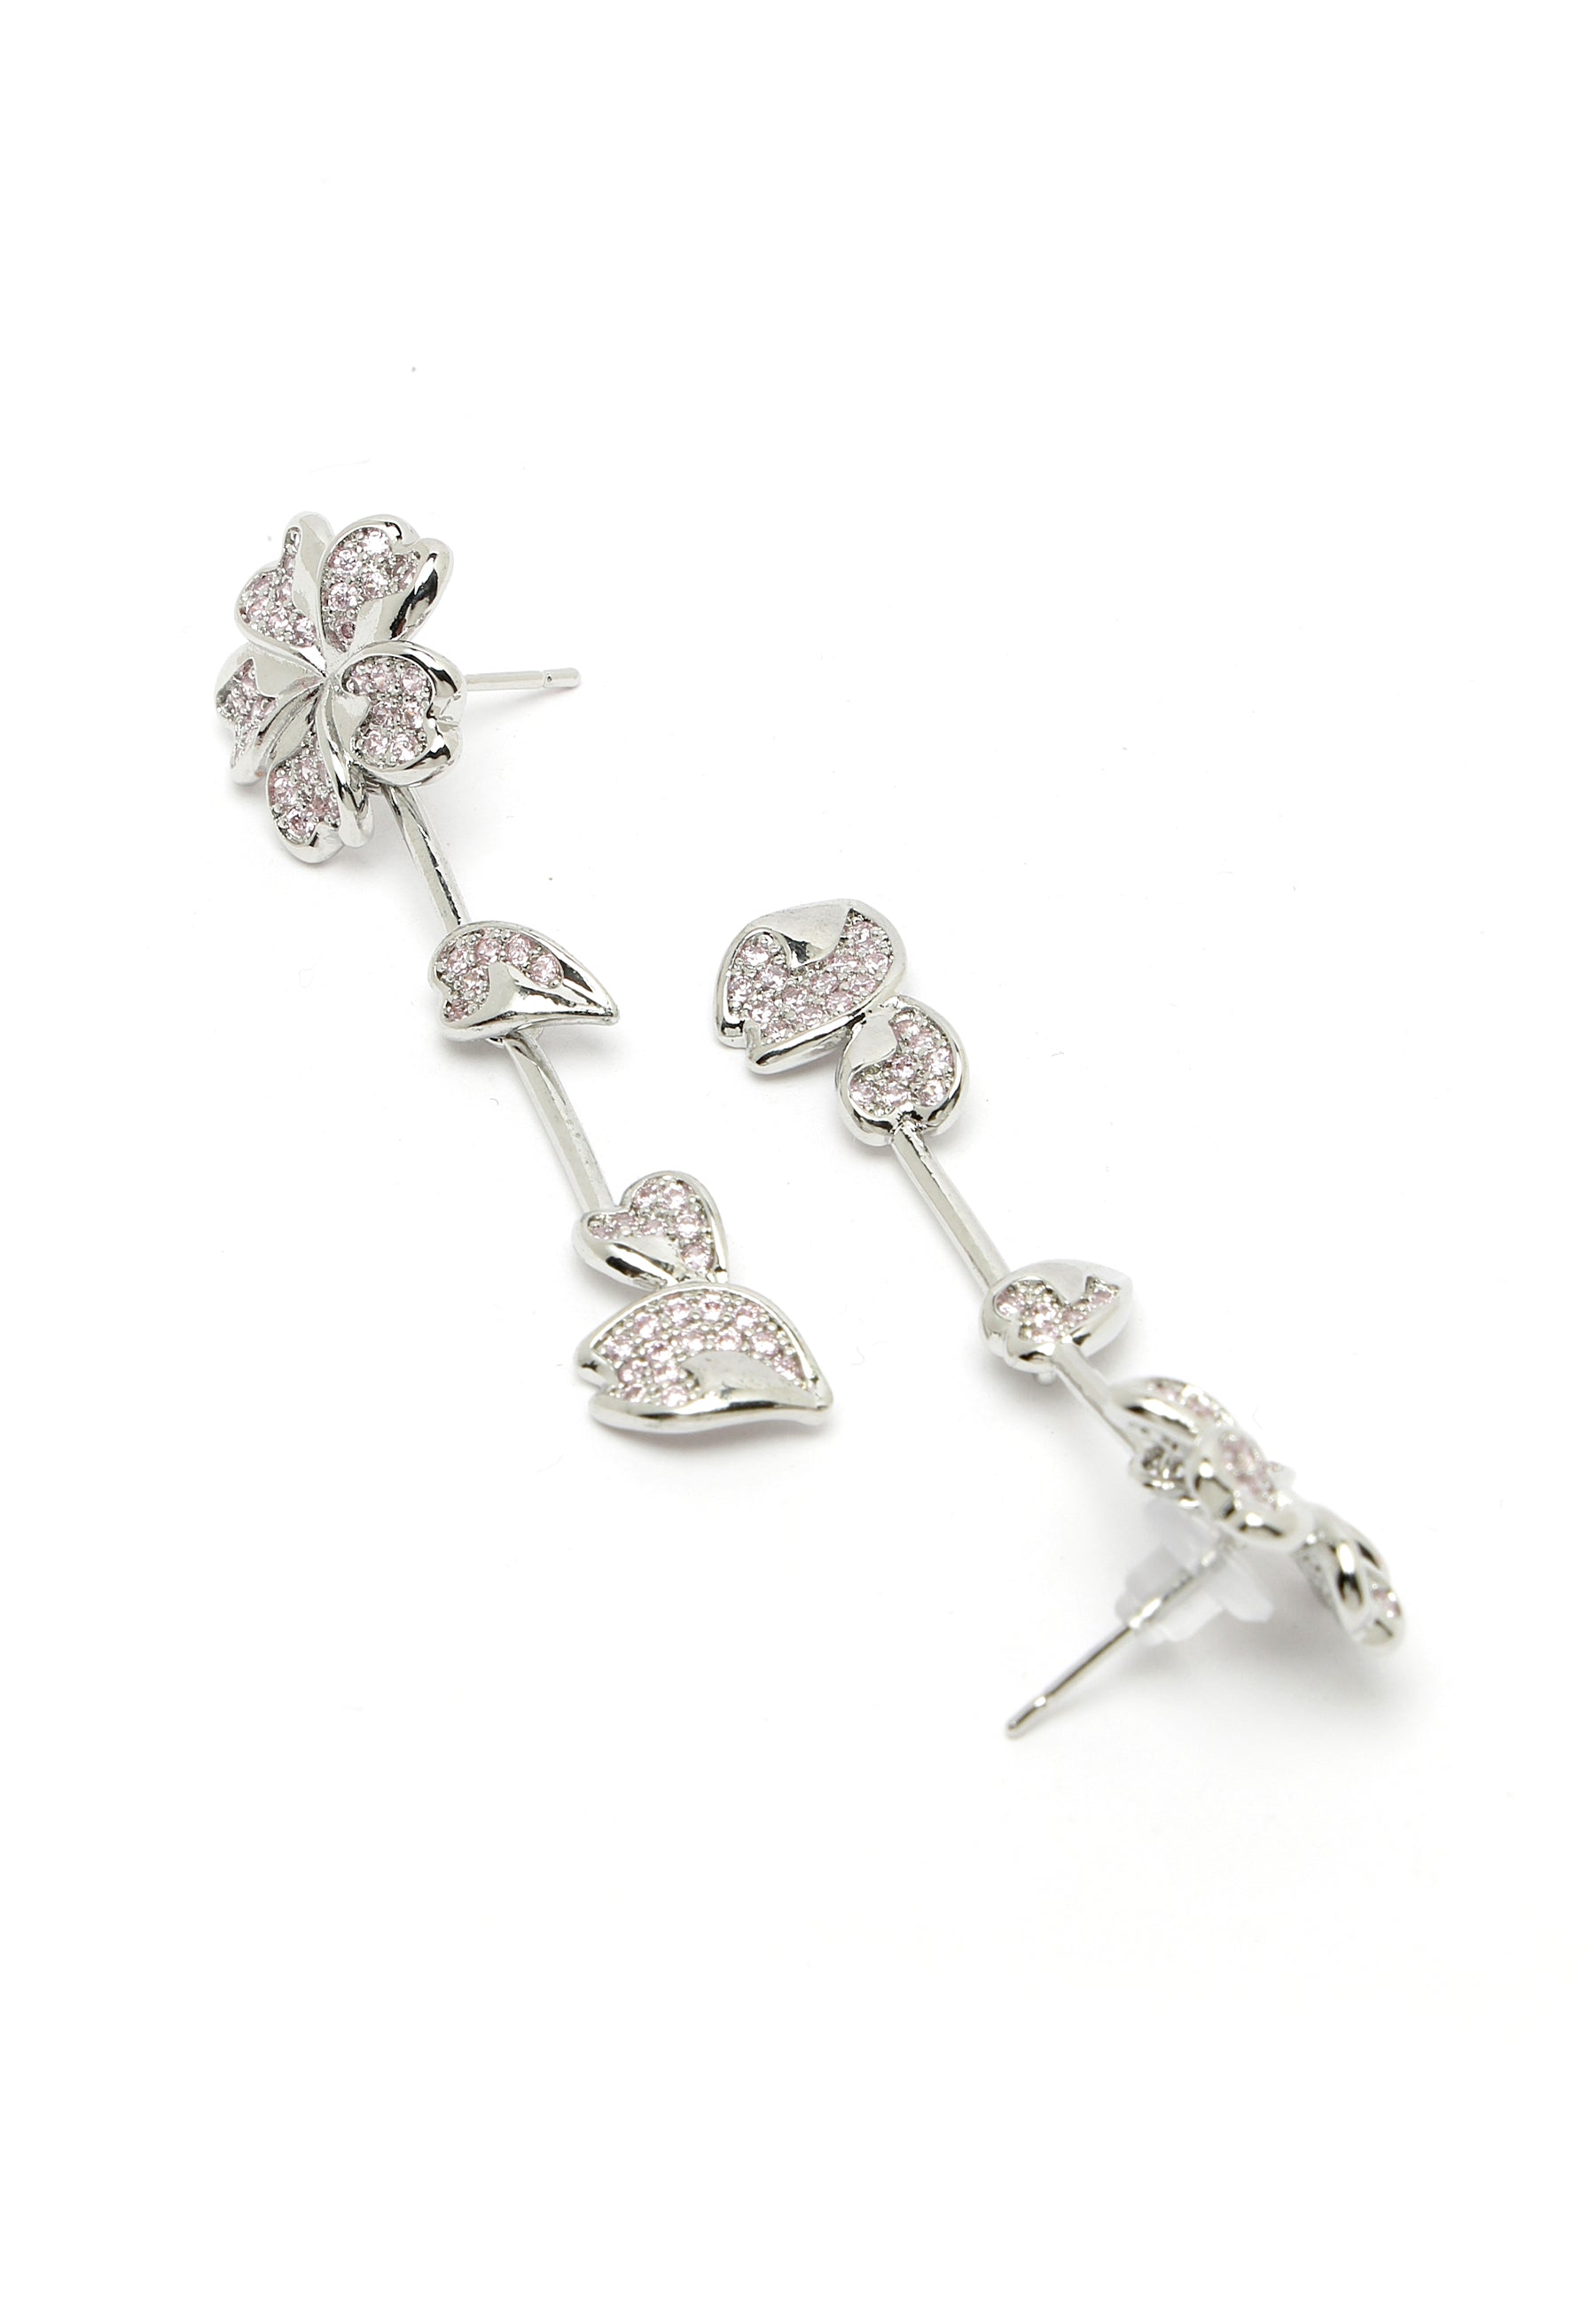 Avant-Garde Paris Iconic Silver-Colored Floral Drop Earrings